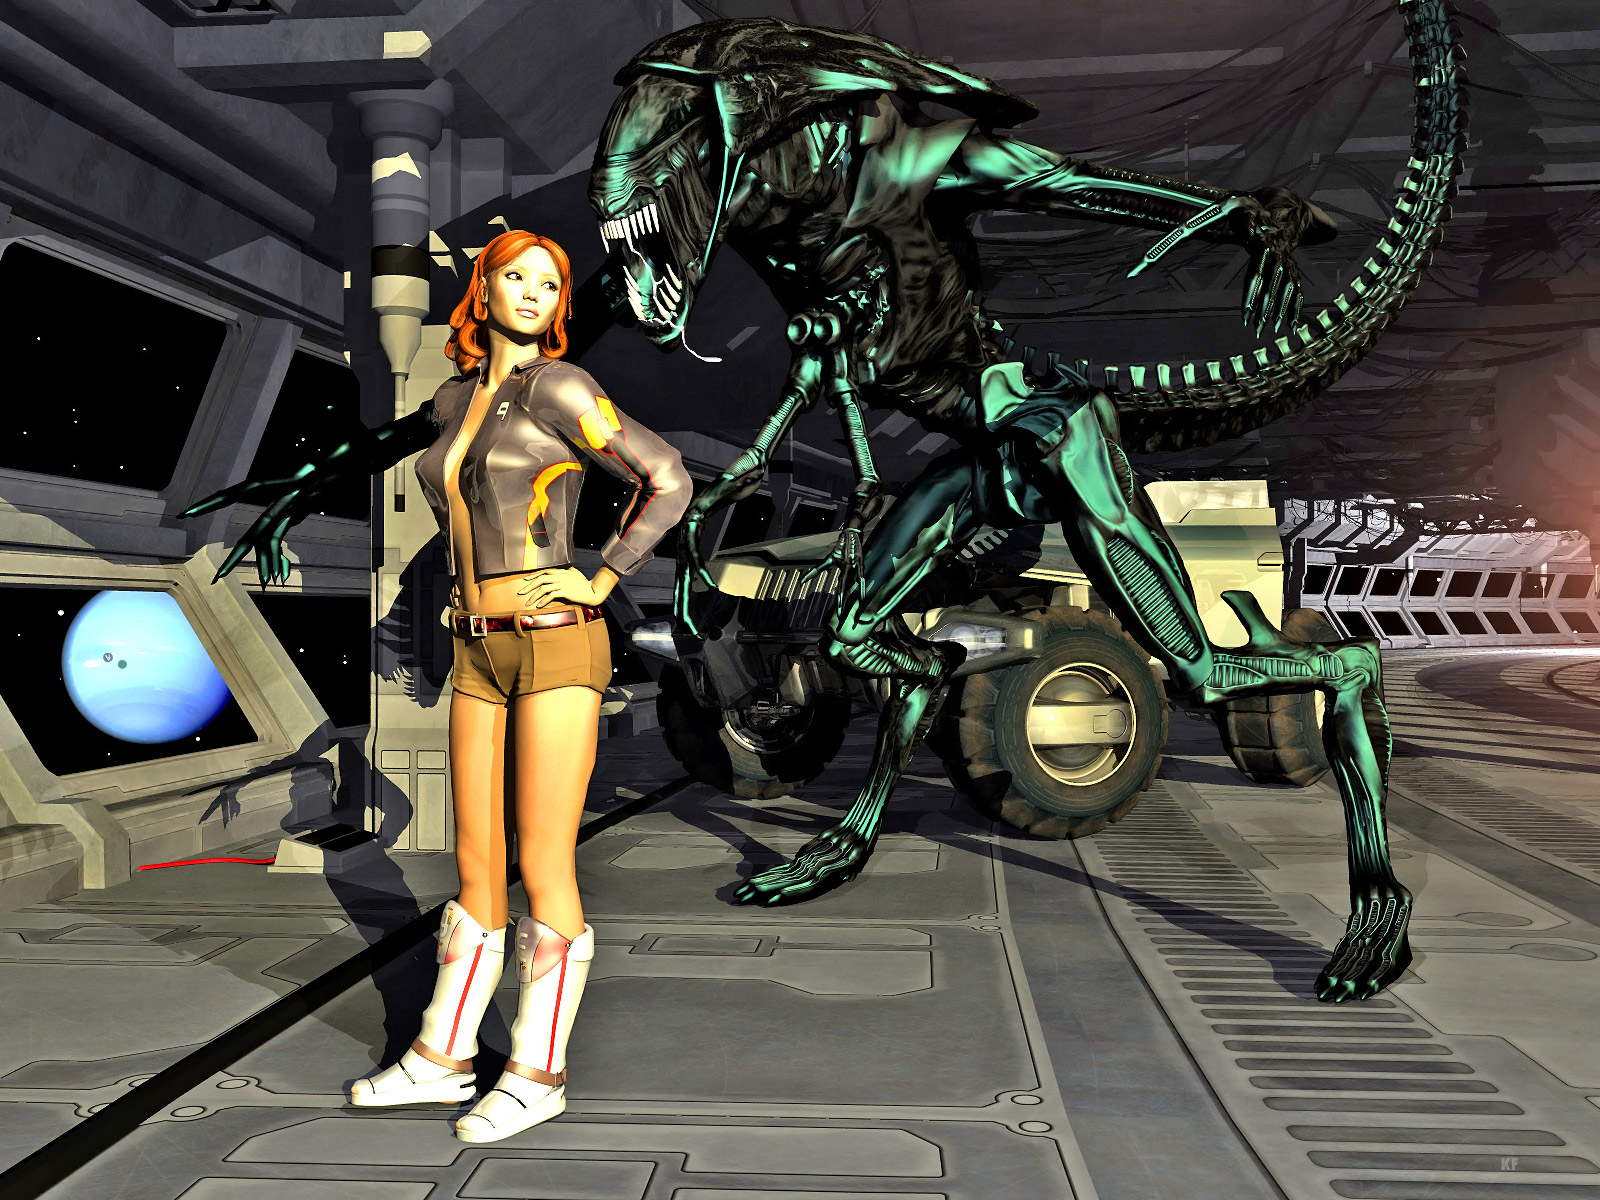 Alien Girl Games - Smoking hot girls stuffed with huge alien cocks | Elf raped by demons